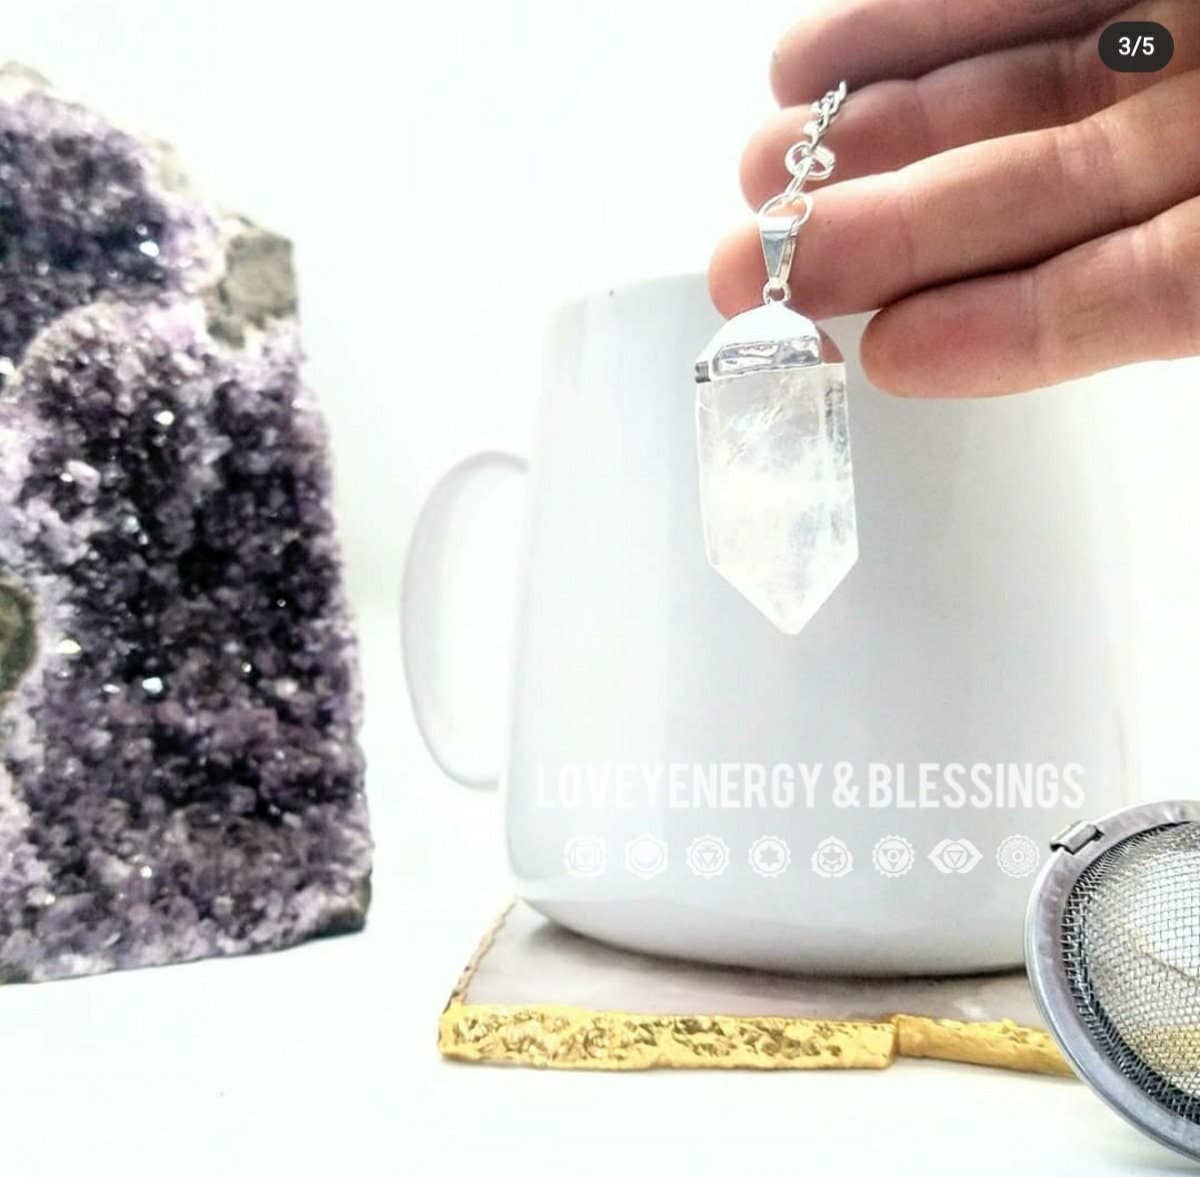 Loveyenergy & Blessings - Quartz Crystal Tea Infuser, Crystal Infuser Loose Leaf Tea